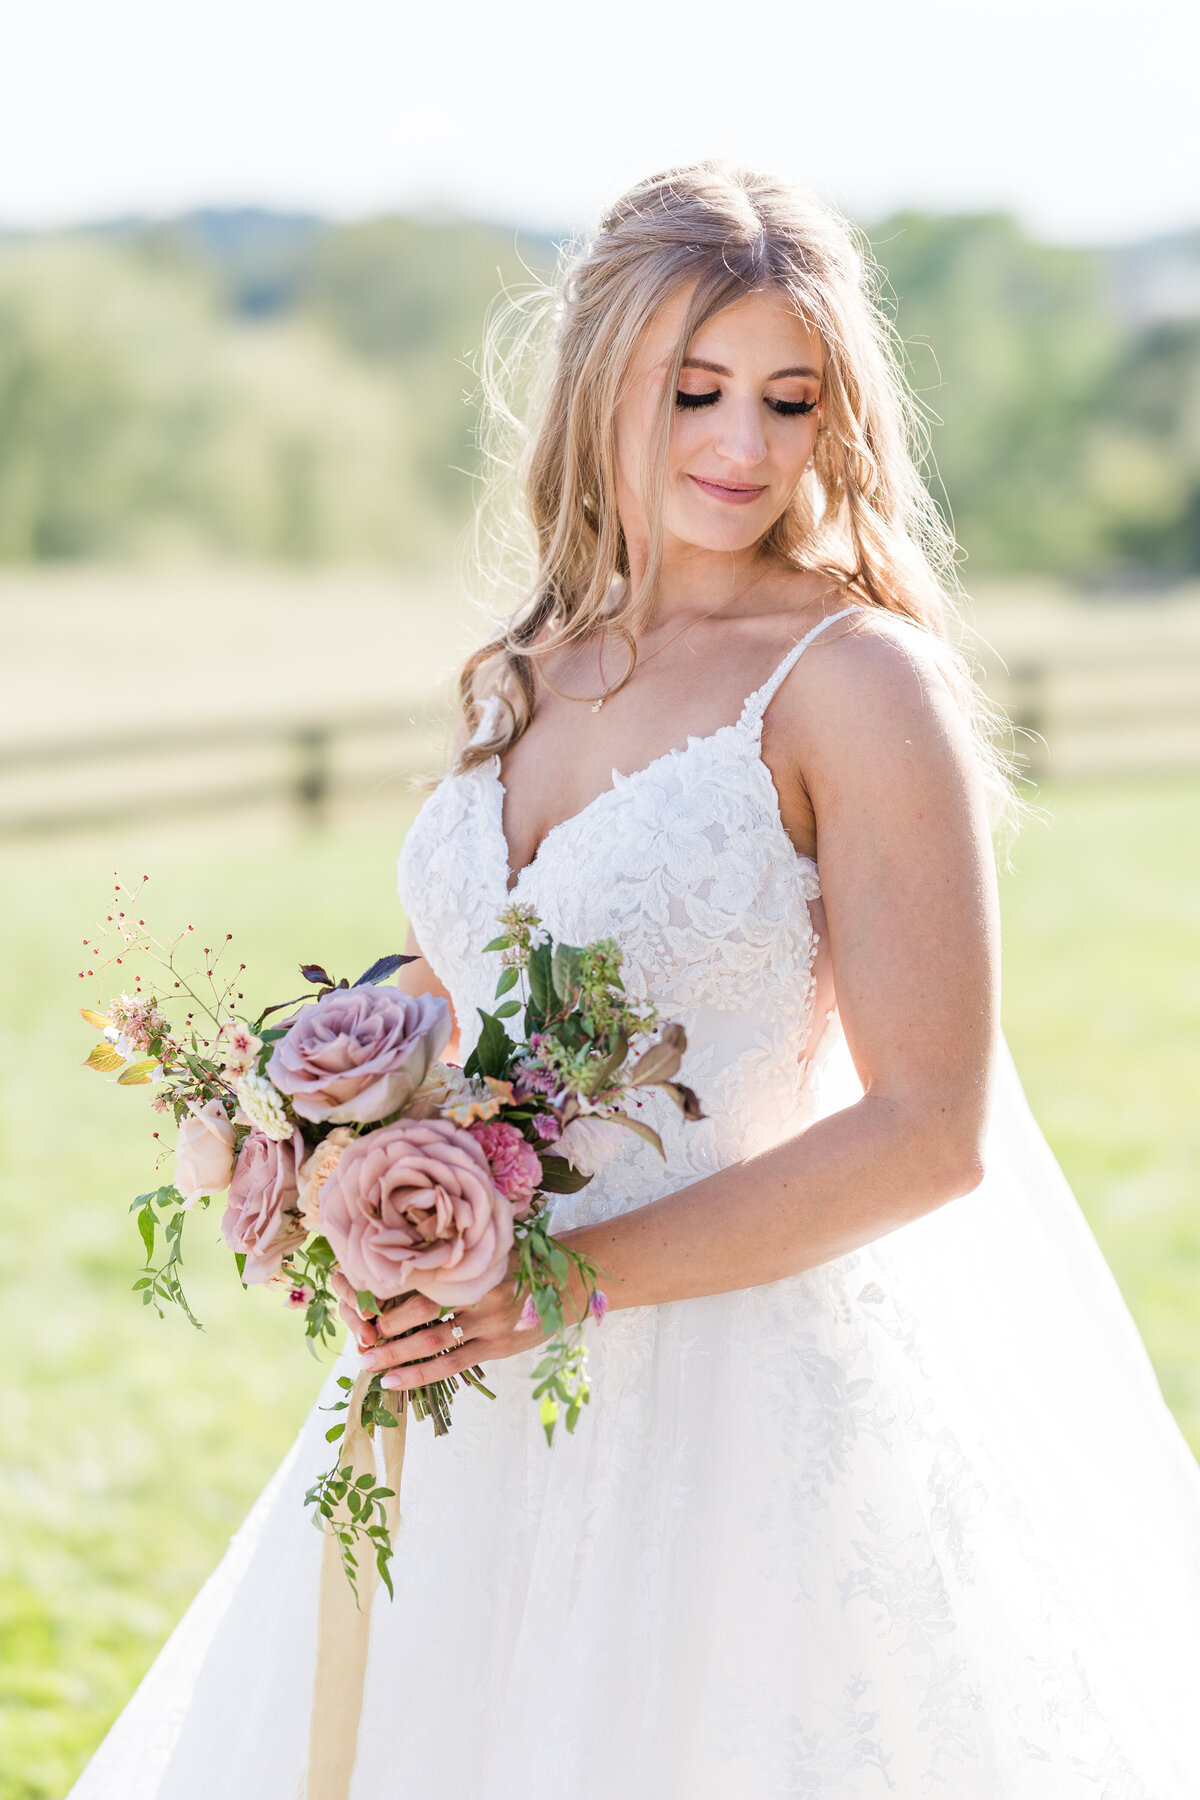 Kelsie & Marc Wedding - Taylor'd Southern Events - Maryland Wedding Photographer -28170